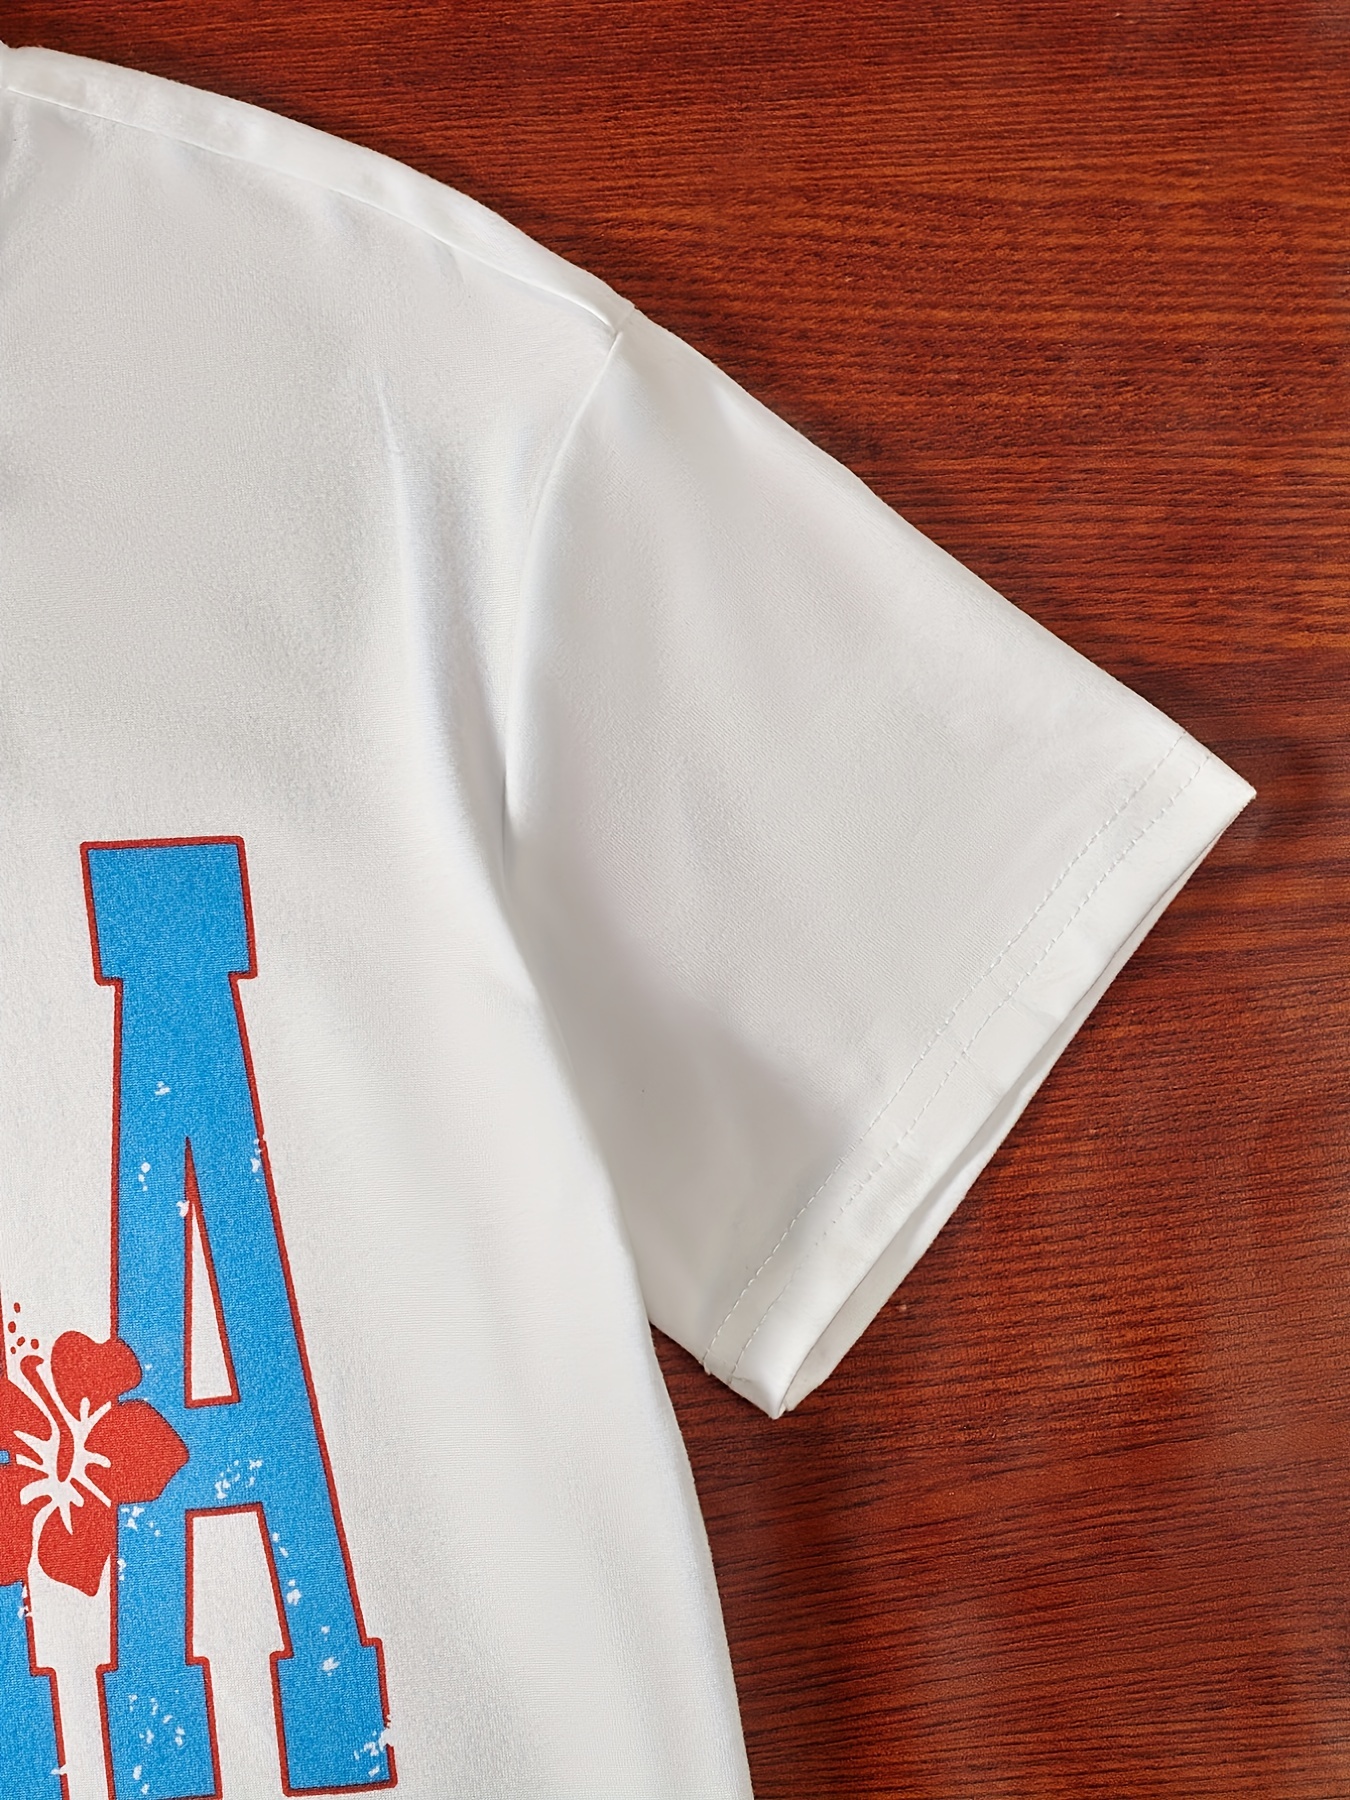 LA Dodgers MLB Floral Graphic White Oversized T-Shirt